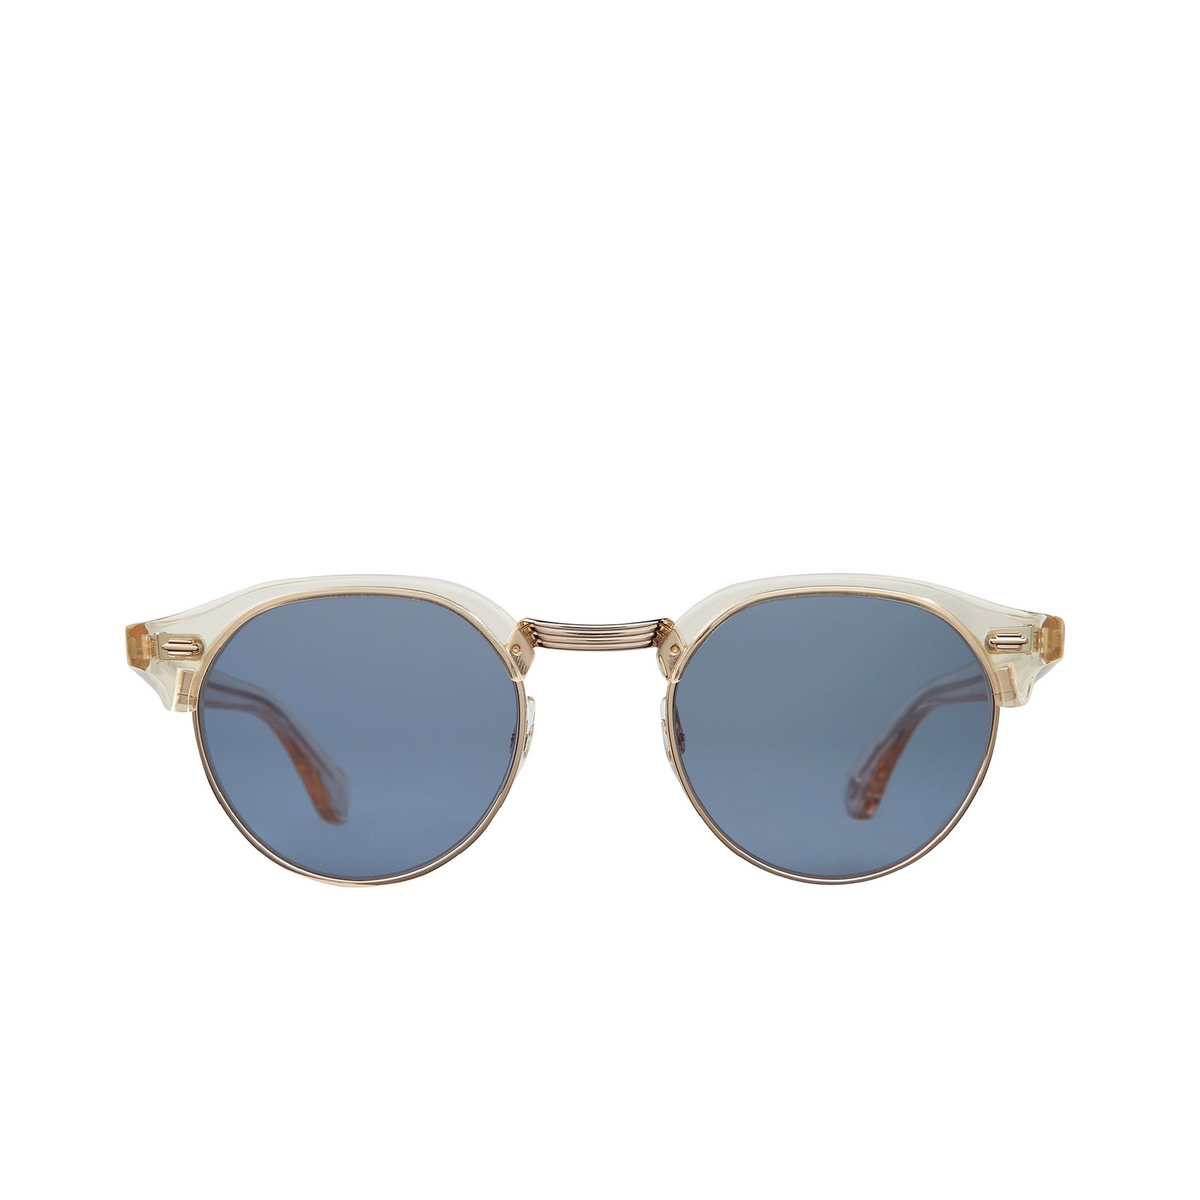 Garrett Leight OAKWOOD Sunglasses PG-G/NVY Pure Glass-Gold/Navy - front view